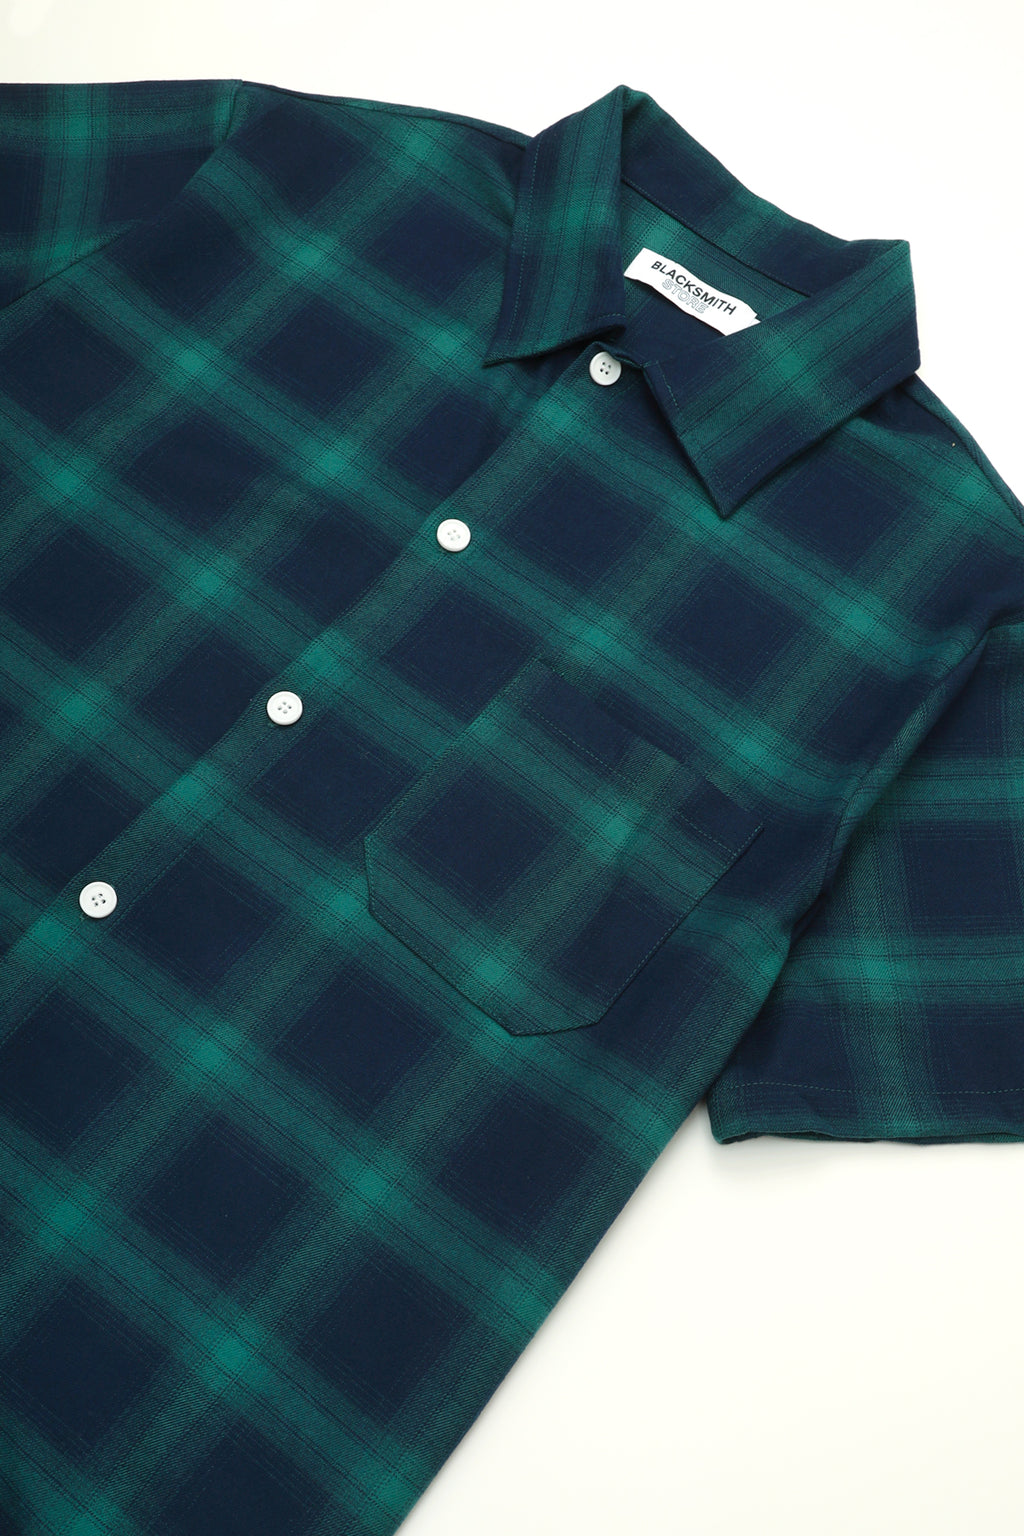 Blacksmith - Shadow Plaid Short Sleeve Shirt - Navy/Green